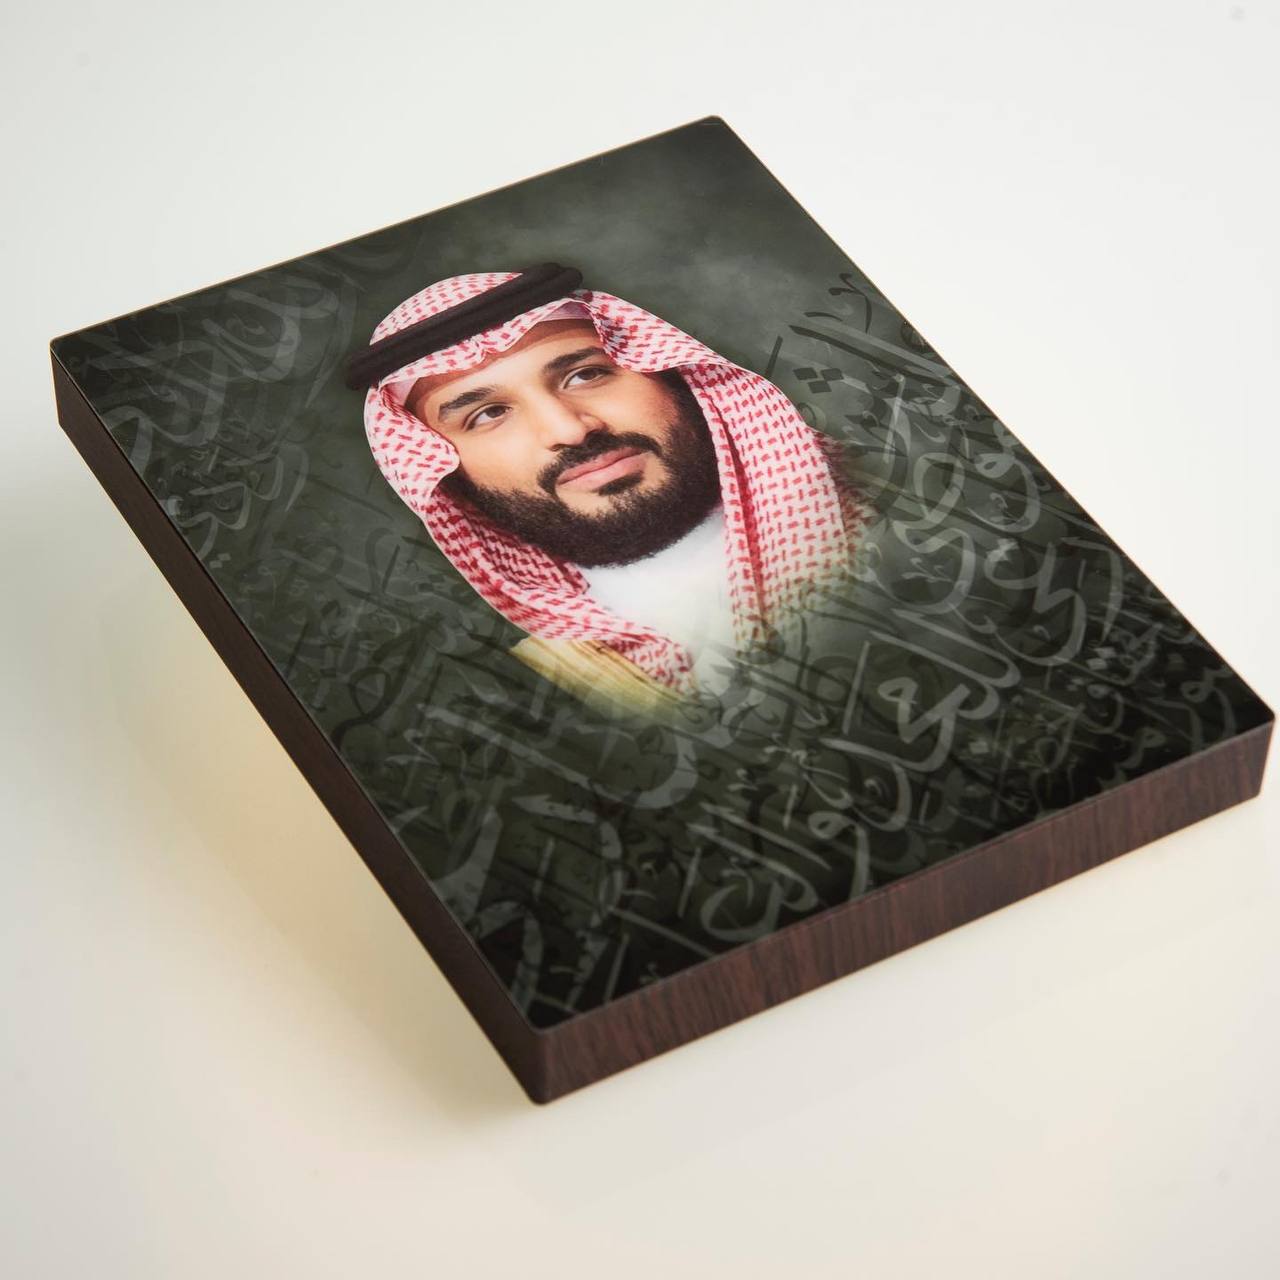 Rovatti Top Edition Digital table clock - Sheikh Mohammed bin Salman